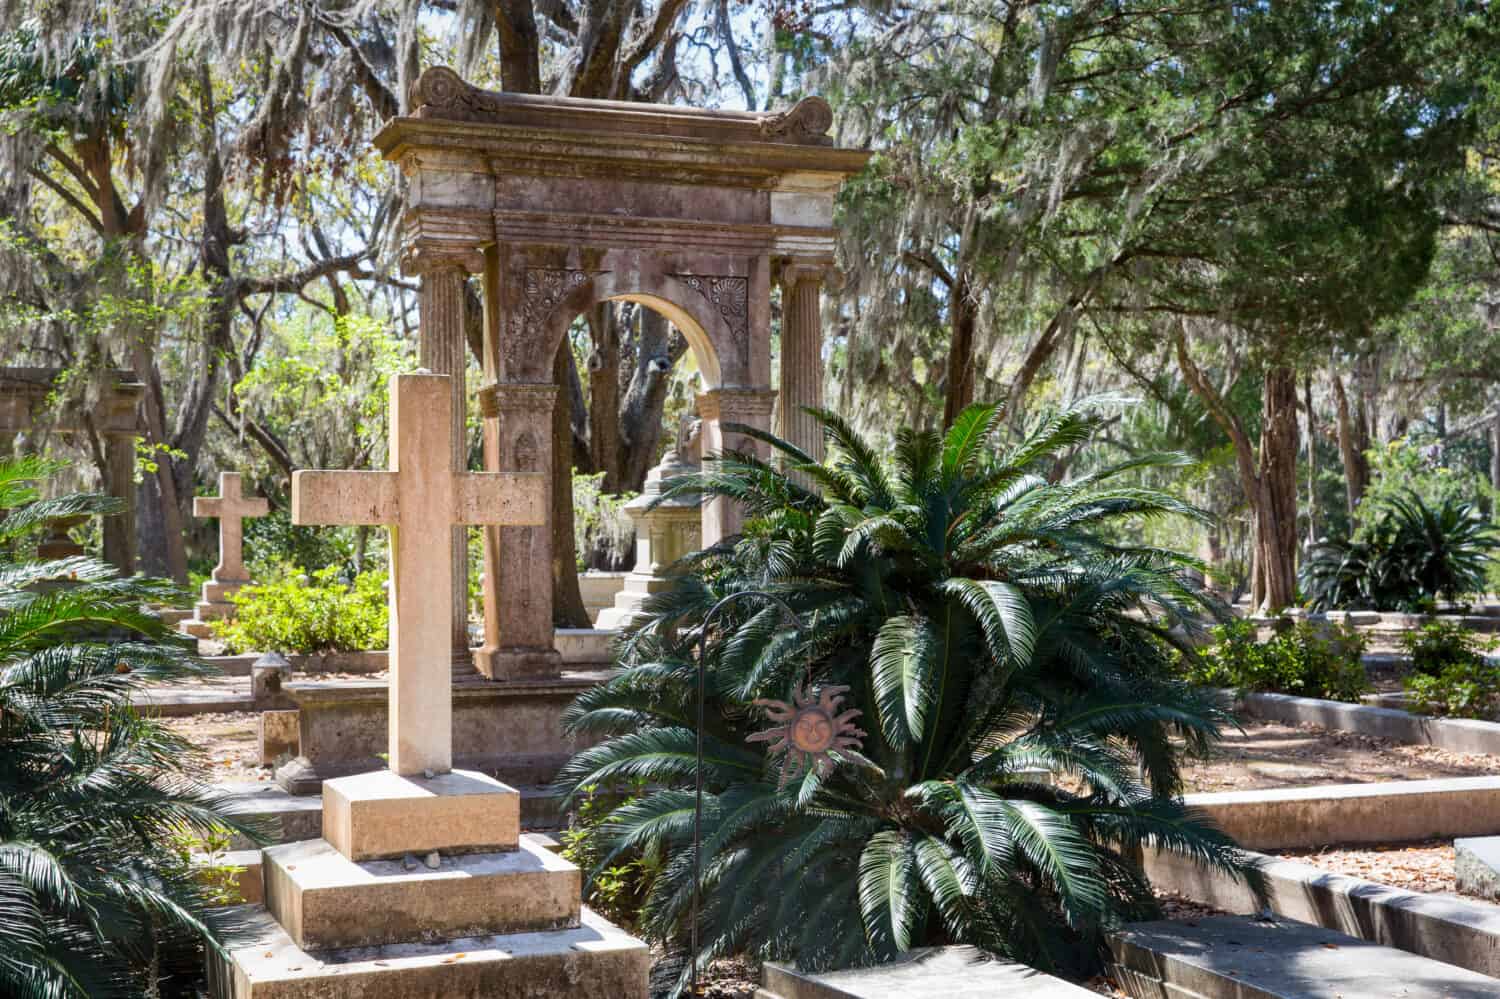 Historic Bonaventure Cemetery in Savannah, GA.  Serene scene with prominent cross in the foreground, lush vegetation, and Spanish moss.